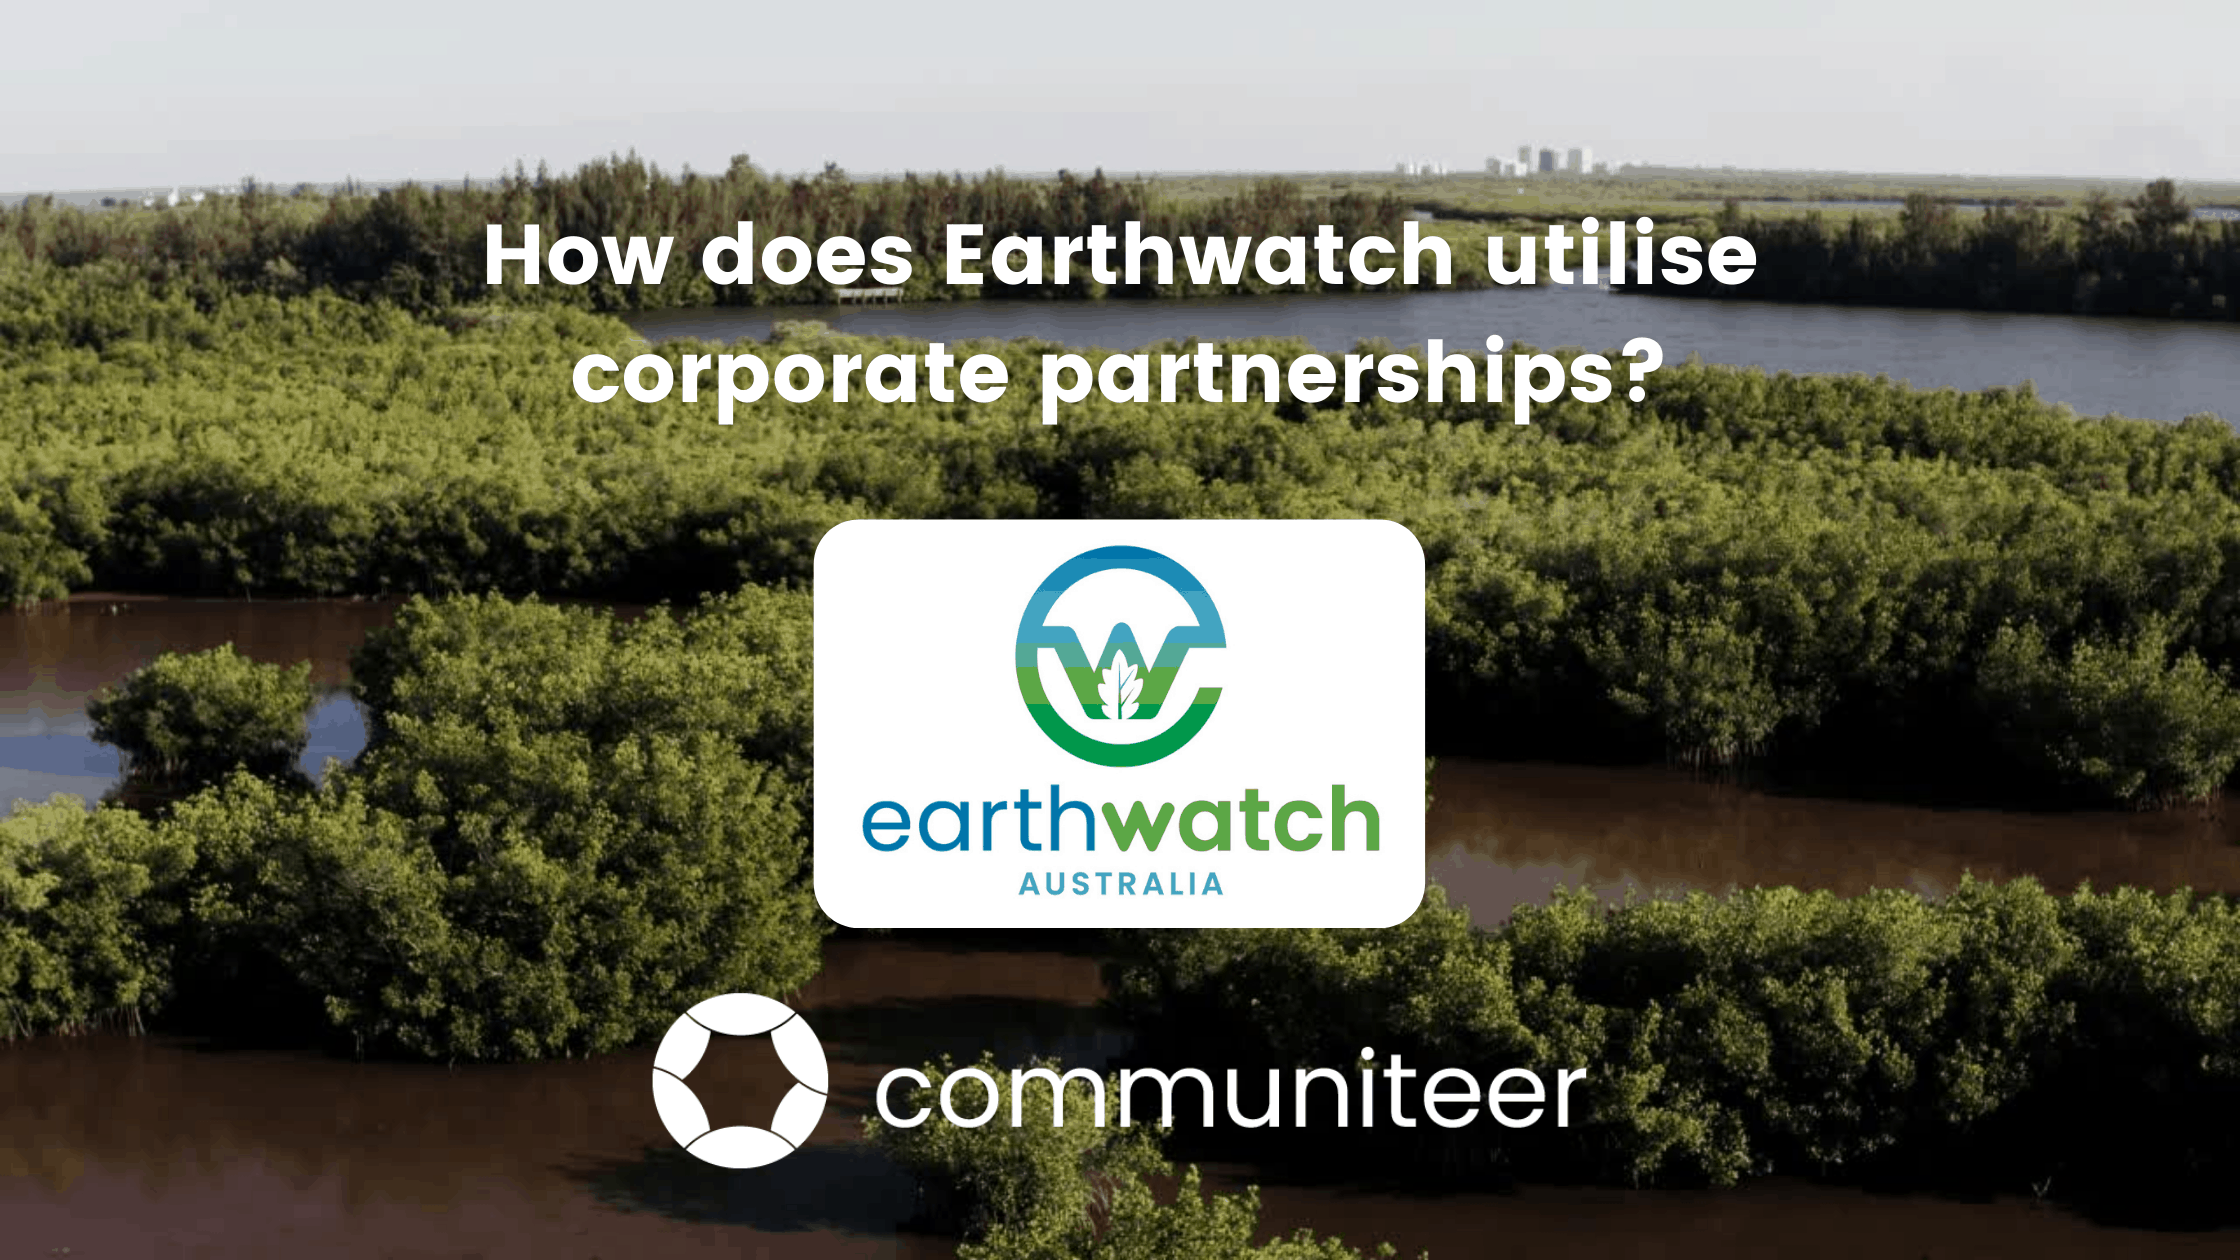 earthwatch utilise corporate partnerships